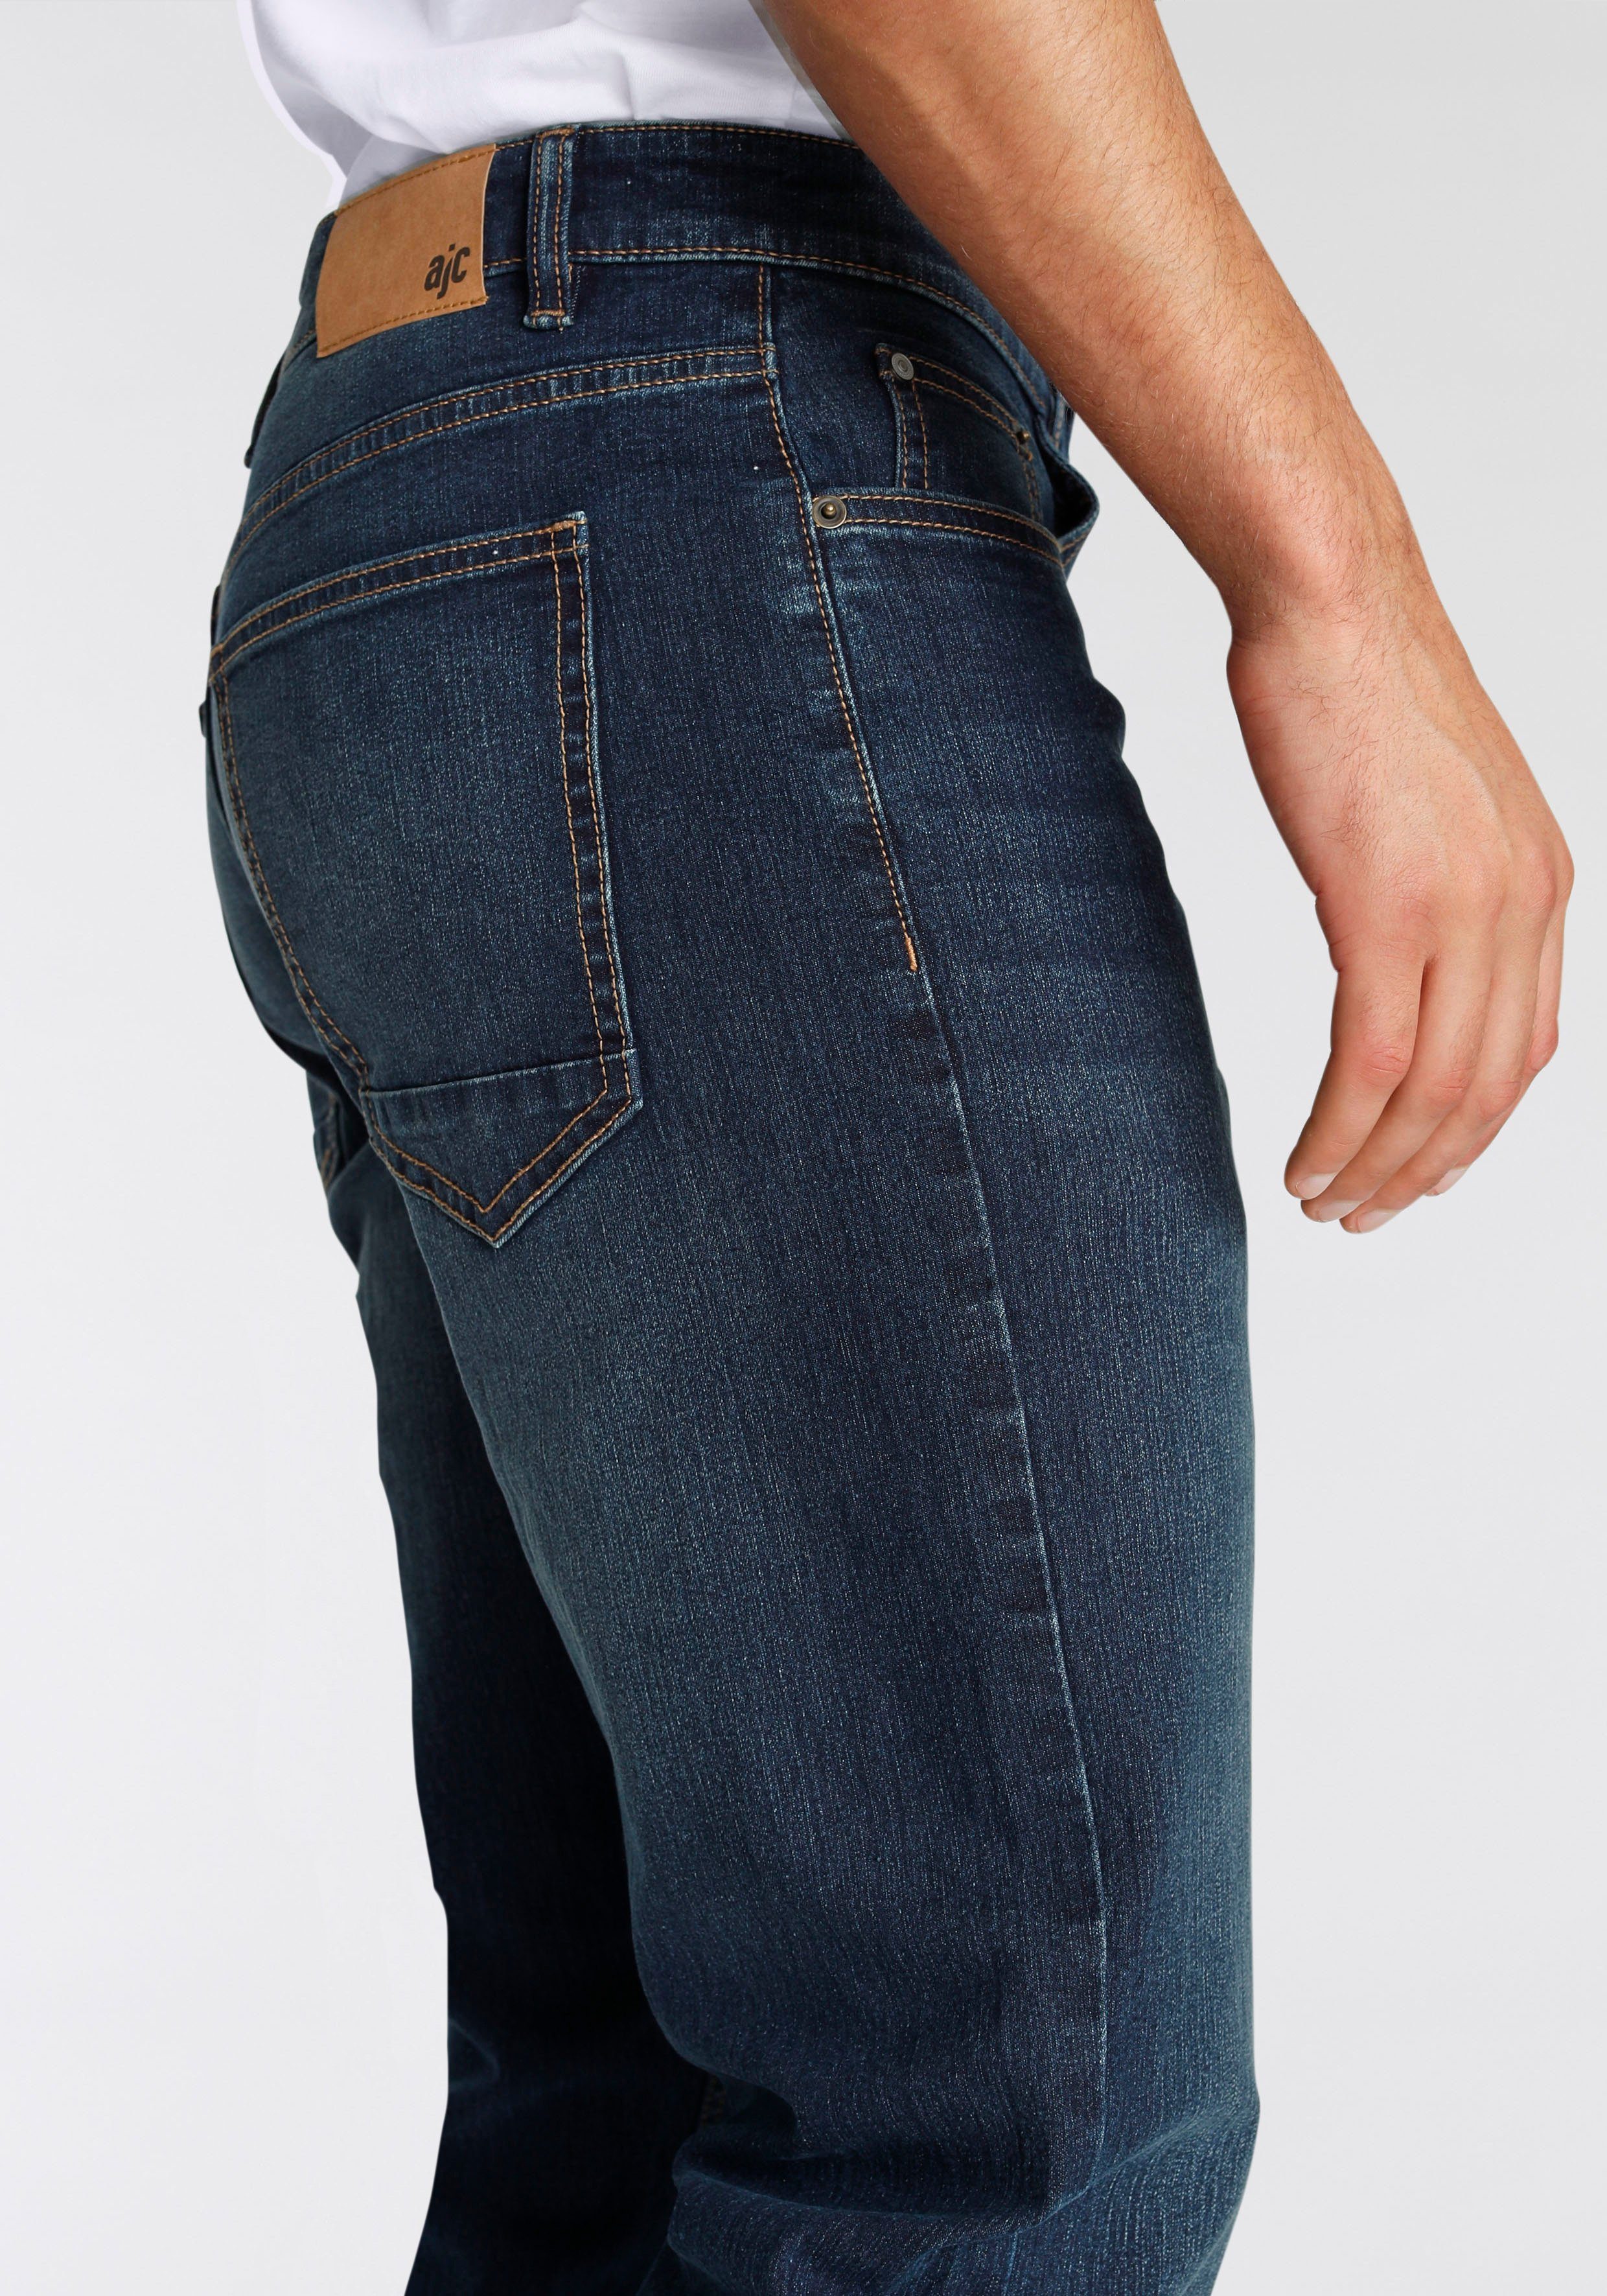 5-Pocket-Style AJC Comfort-fit-Jeans dark blue im